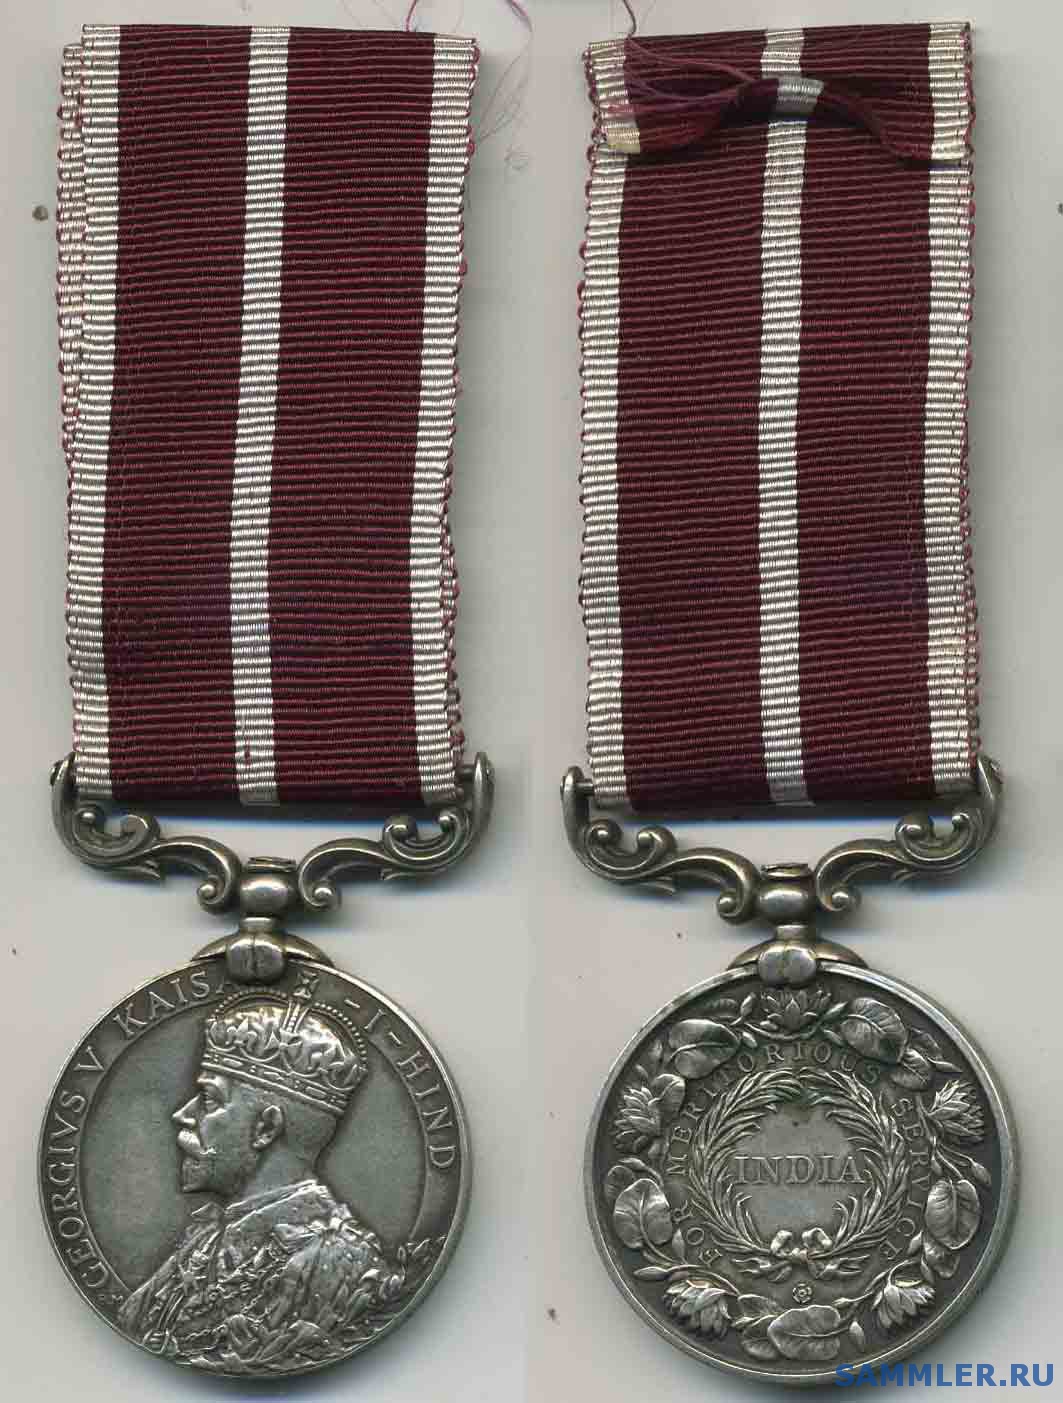 Indian_Meritorious_Service_Medal_GV.jpg